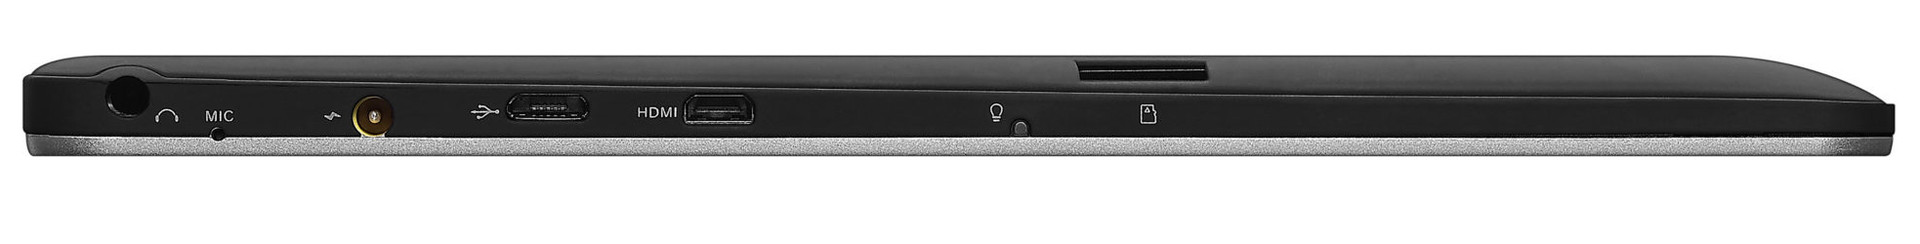 Bestået Regeneration Modig Lenovo IdeaPad Miix 300-10IBY Convertible Review - NotebookCheck.net Reviews